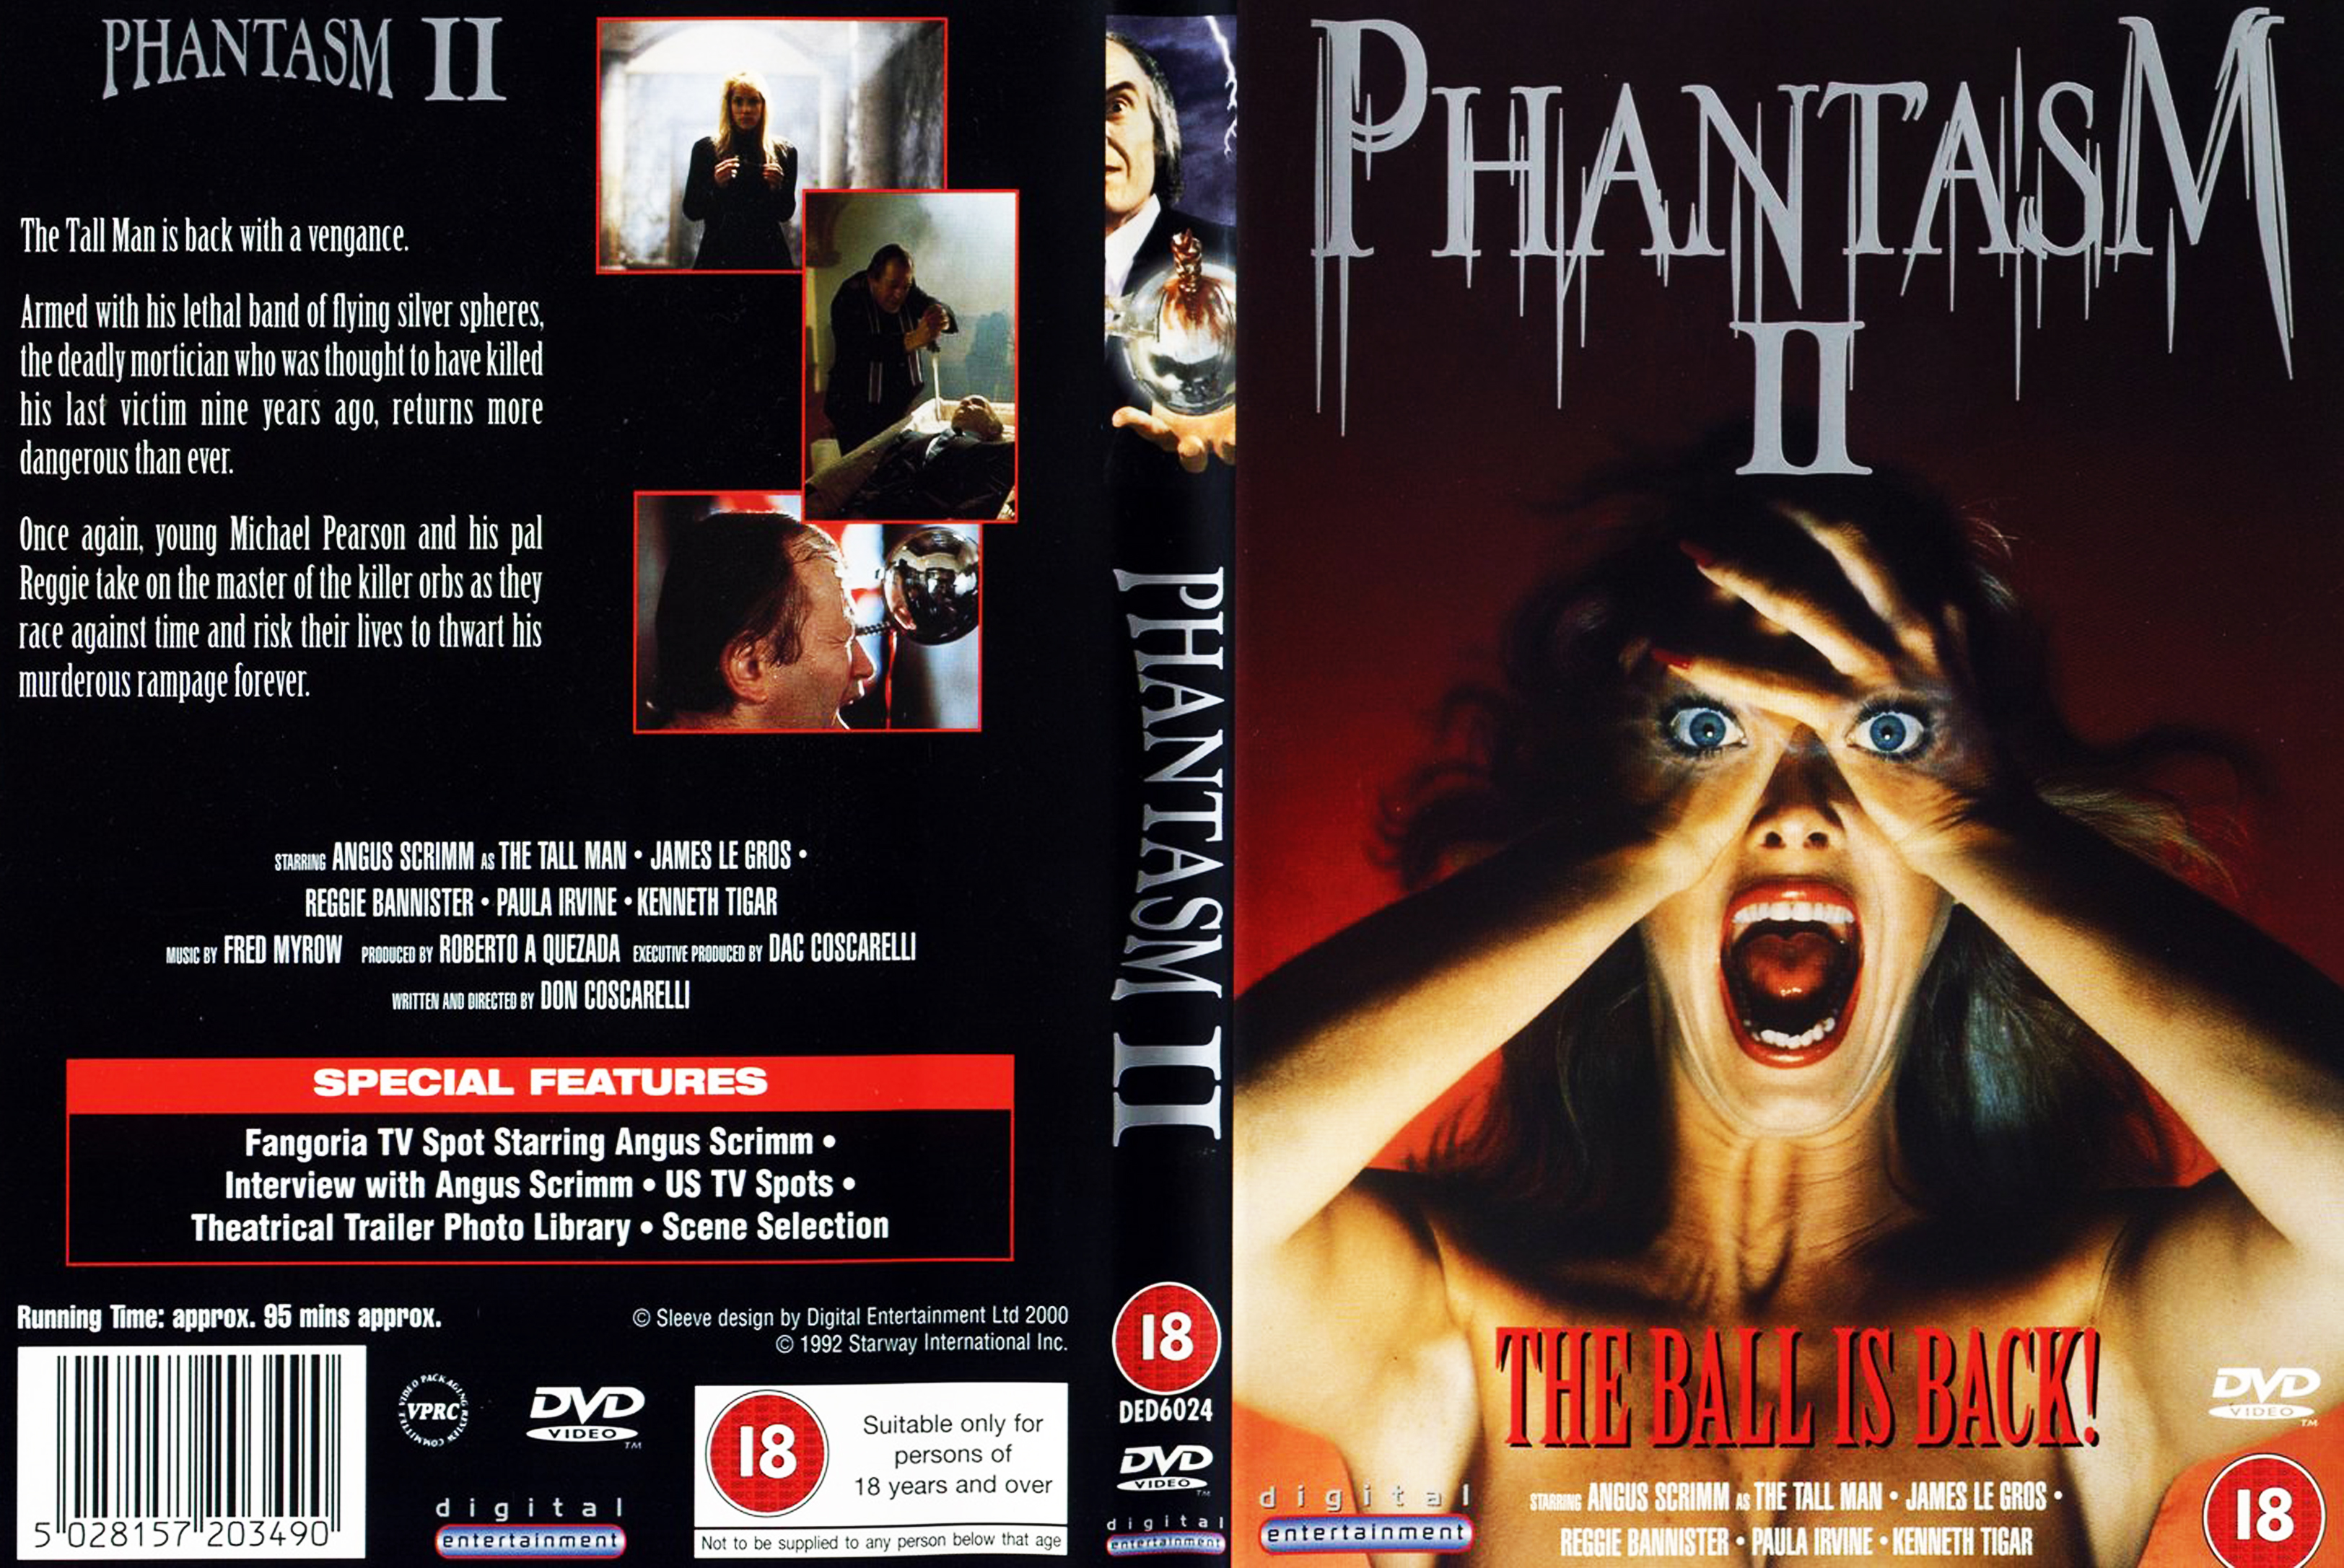 Jaquette DVD Phantasm 2 Zone 1